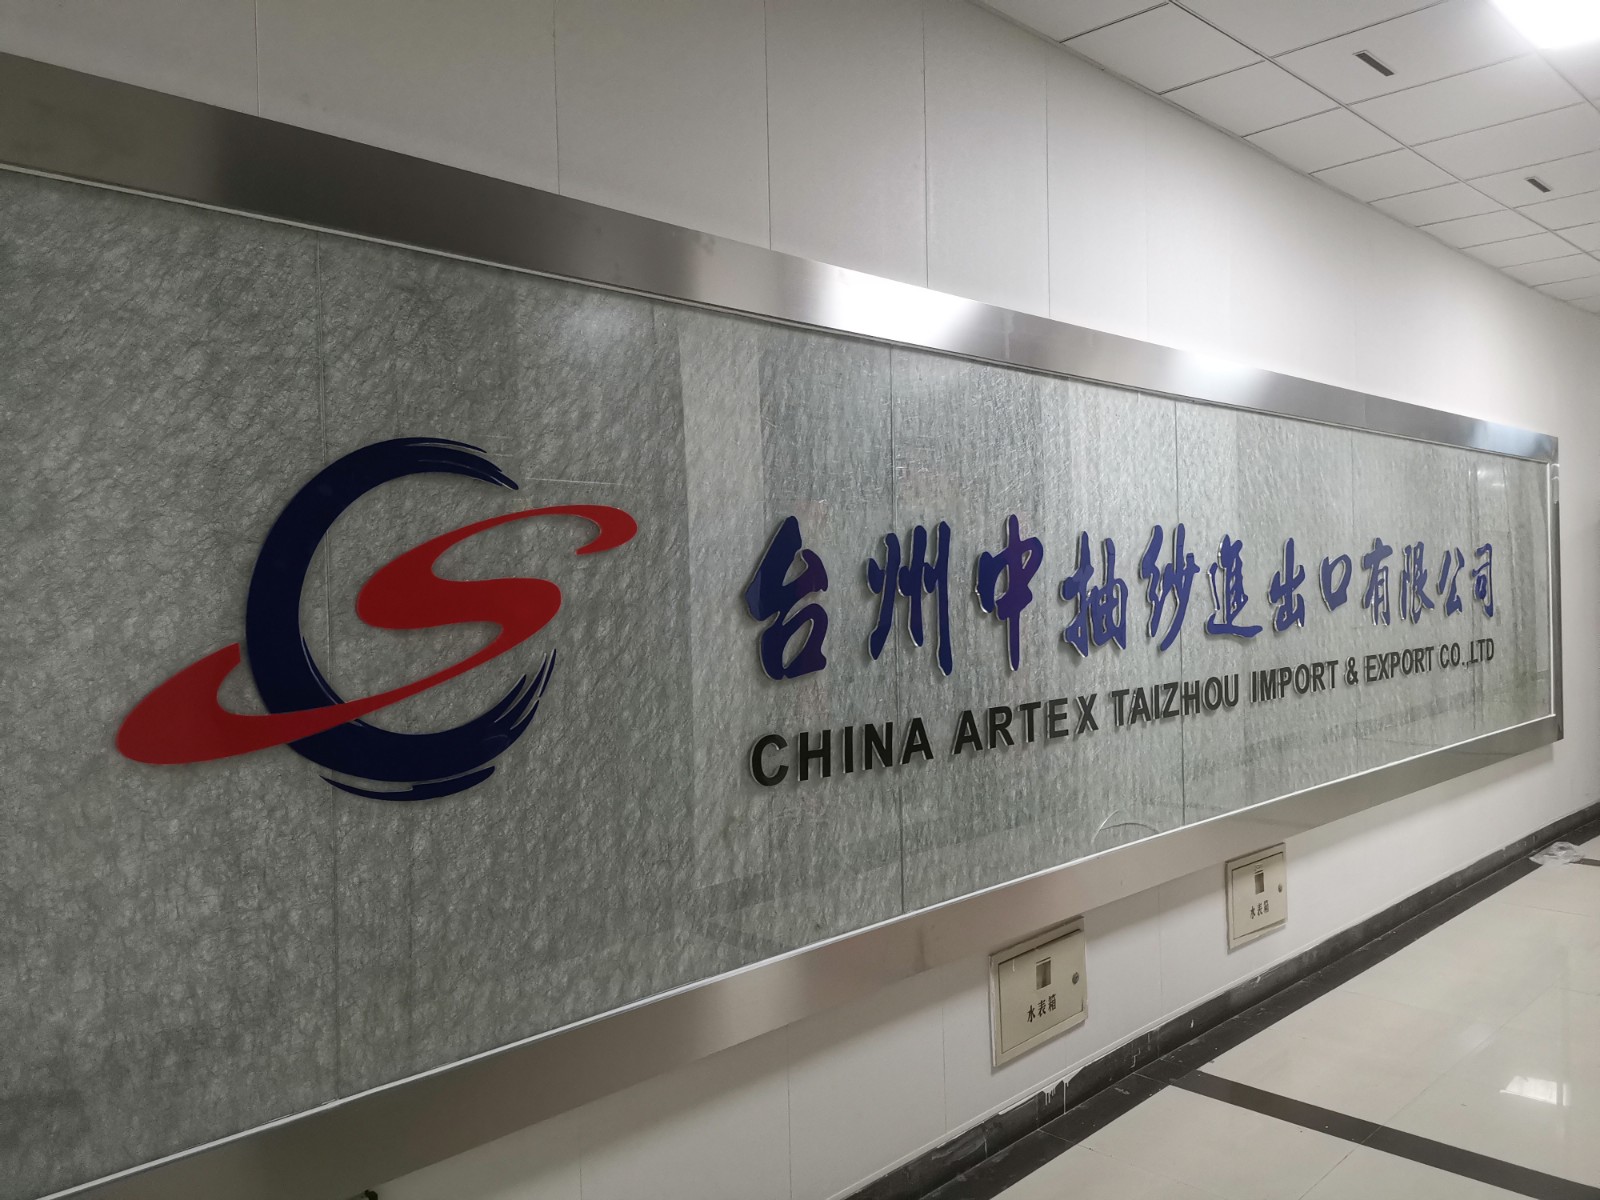 CHINA ARTEX TAIZHOU IMPORT & EXPORT CO., LTD.